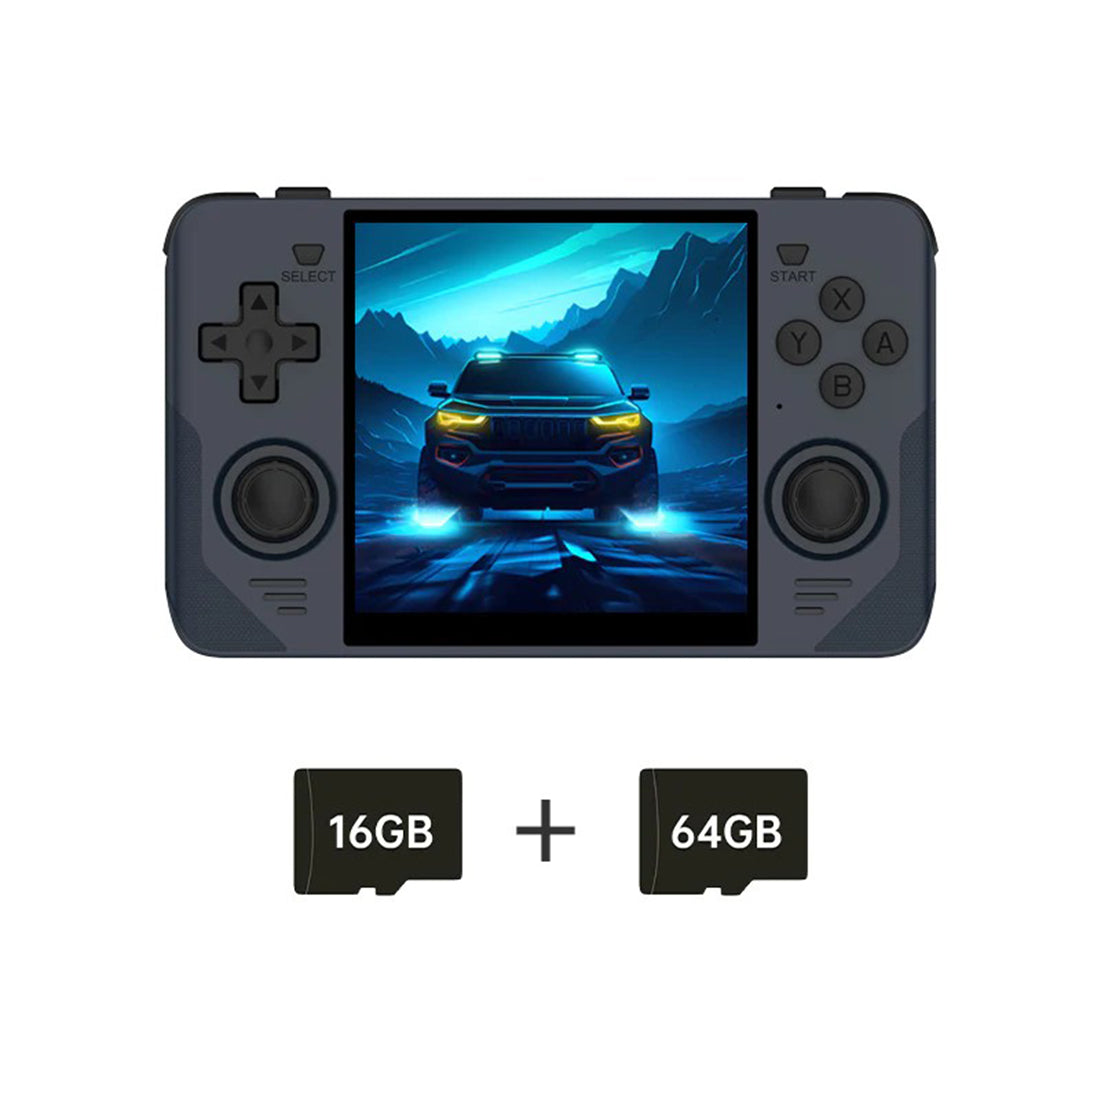 litnxt-powkiddy-rgb30-4-inch-handheld-game-console-blue-16gb_64gb-1100x1100